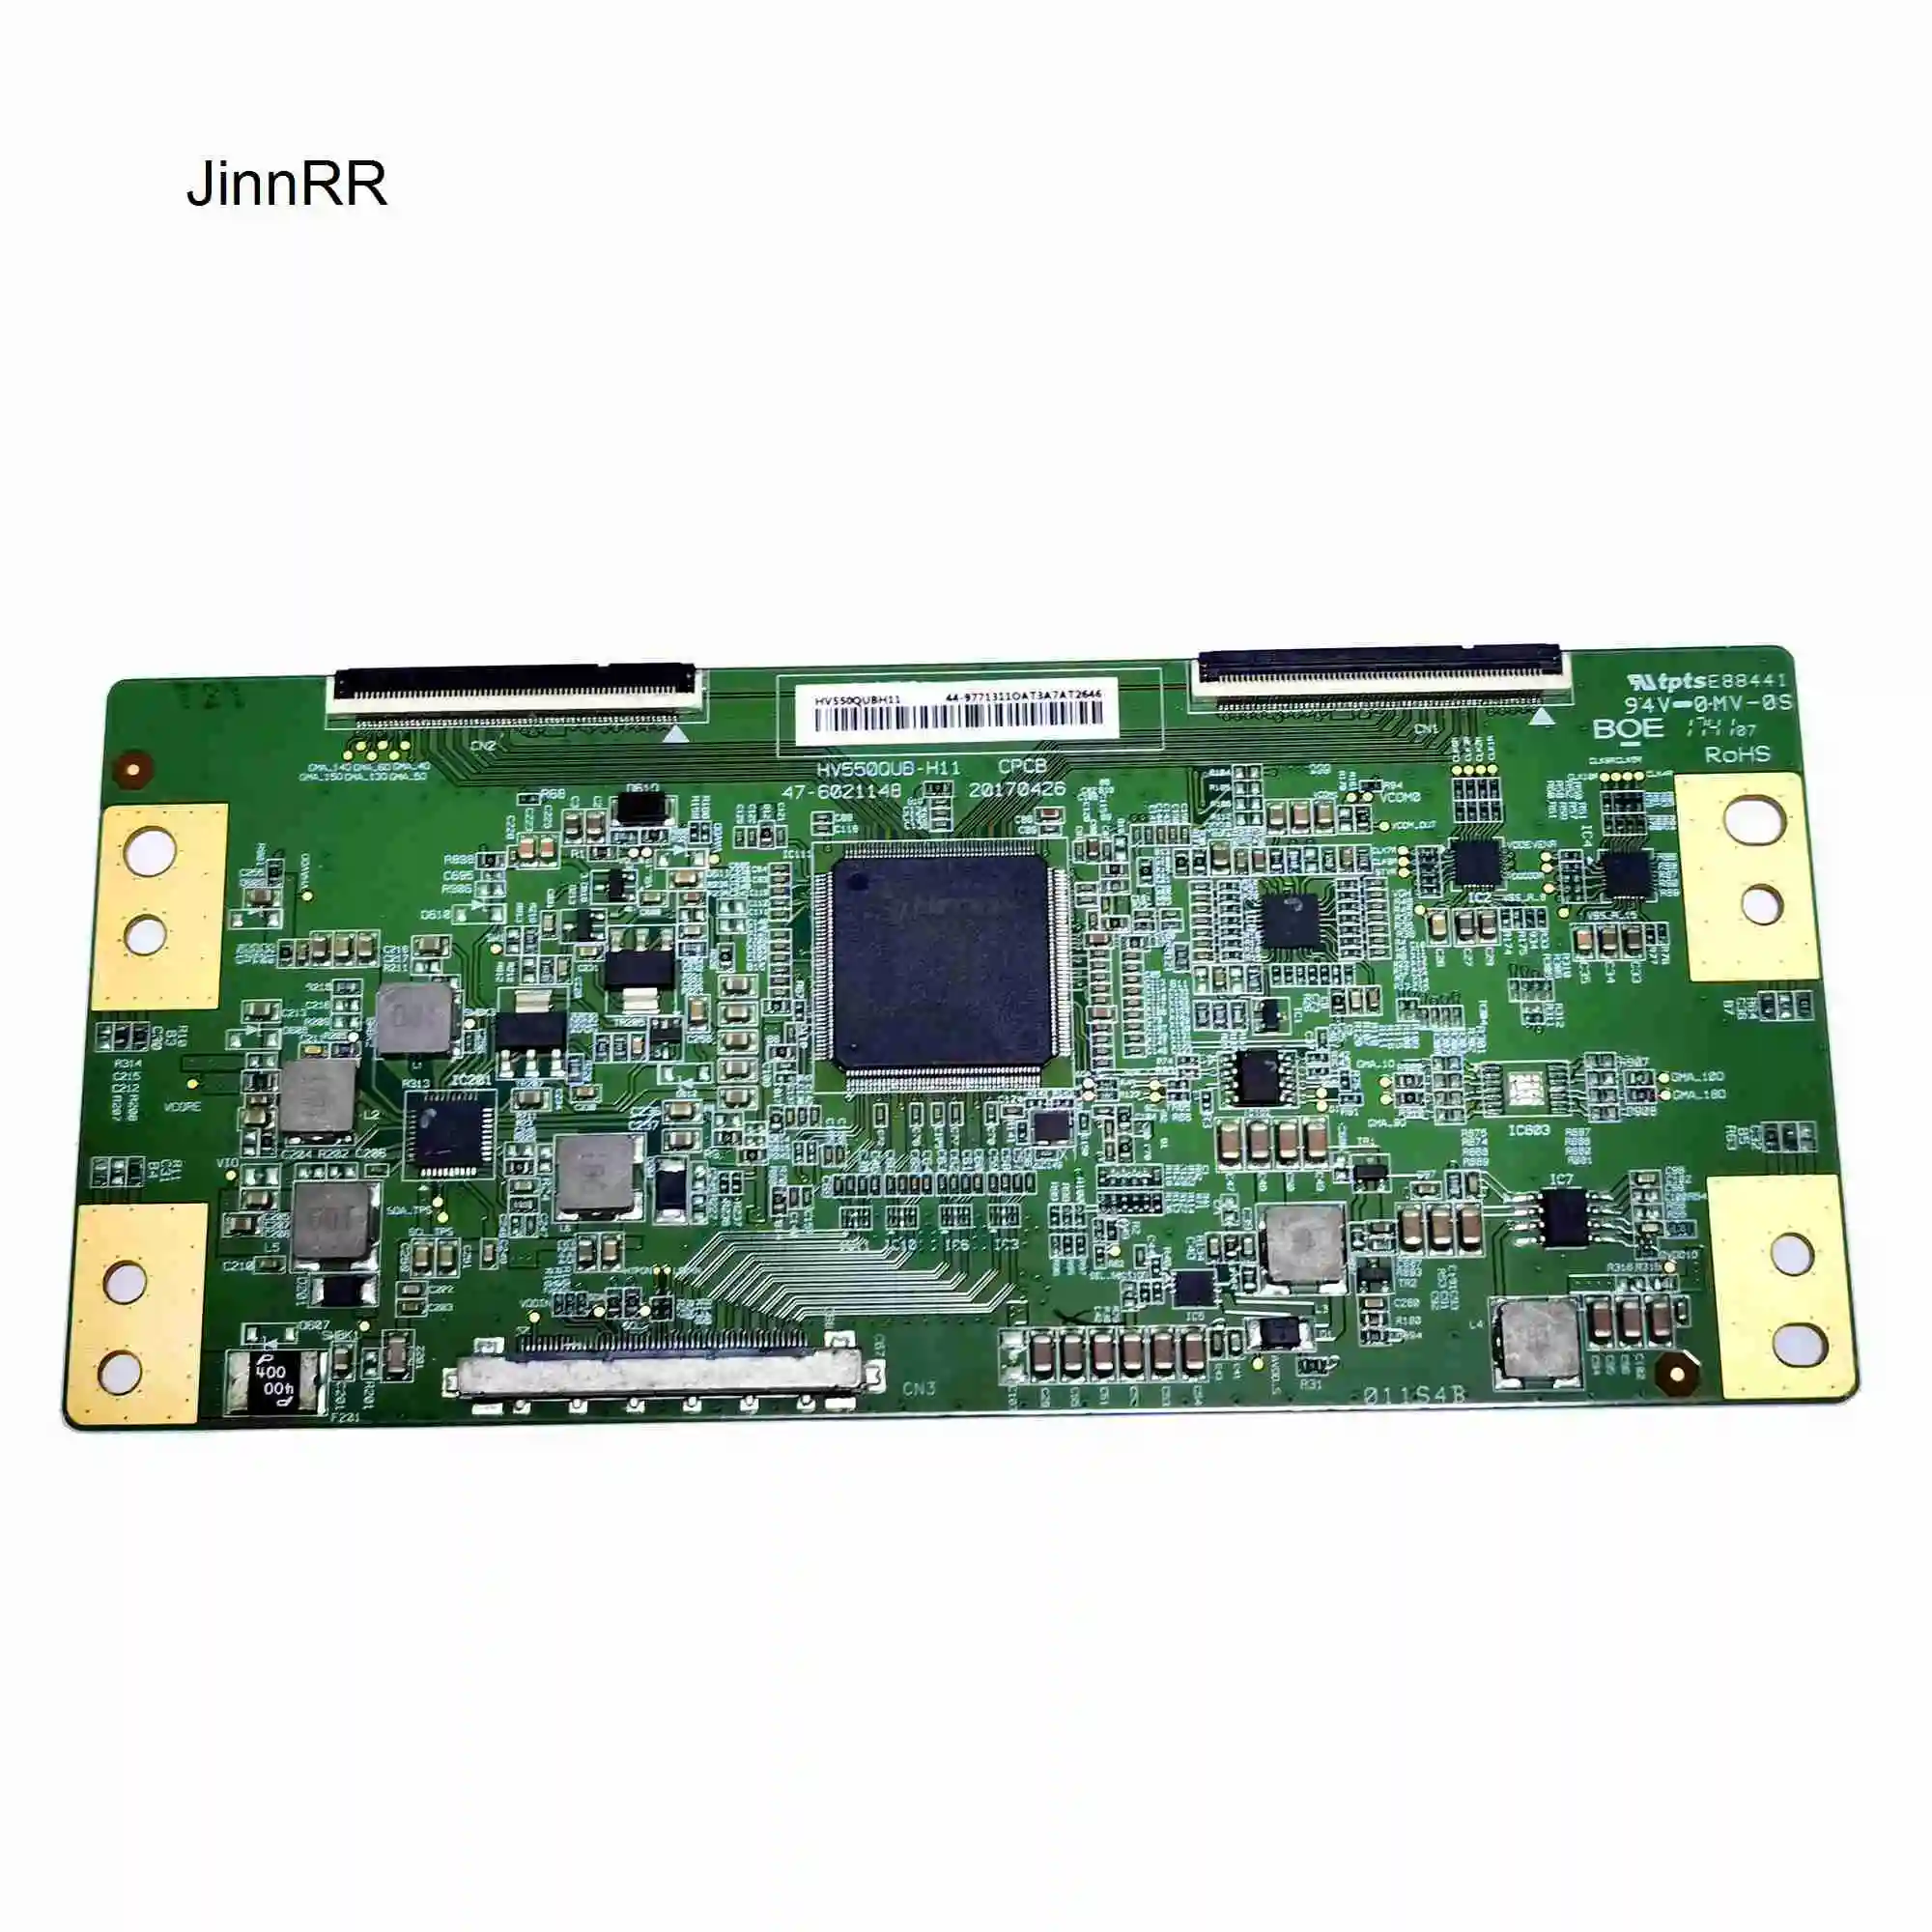 

HV550QUB-H11 47-6021148 new original hv550qub-h11 47-6021148 logic board has been tested in stock HV550QUB-H11 47-6021148